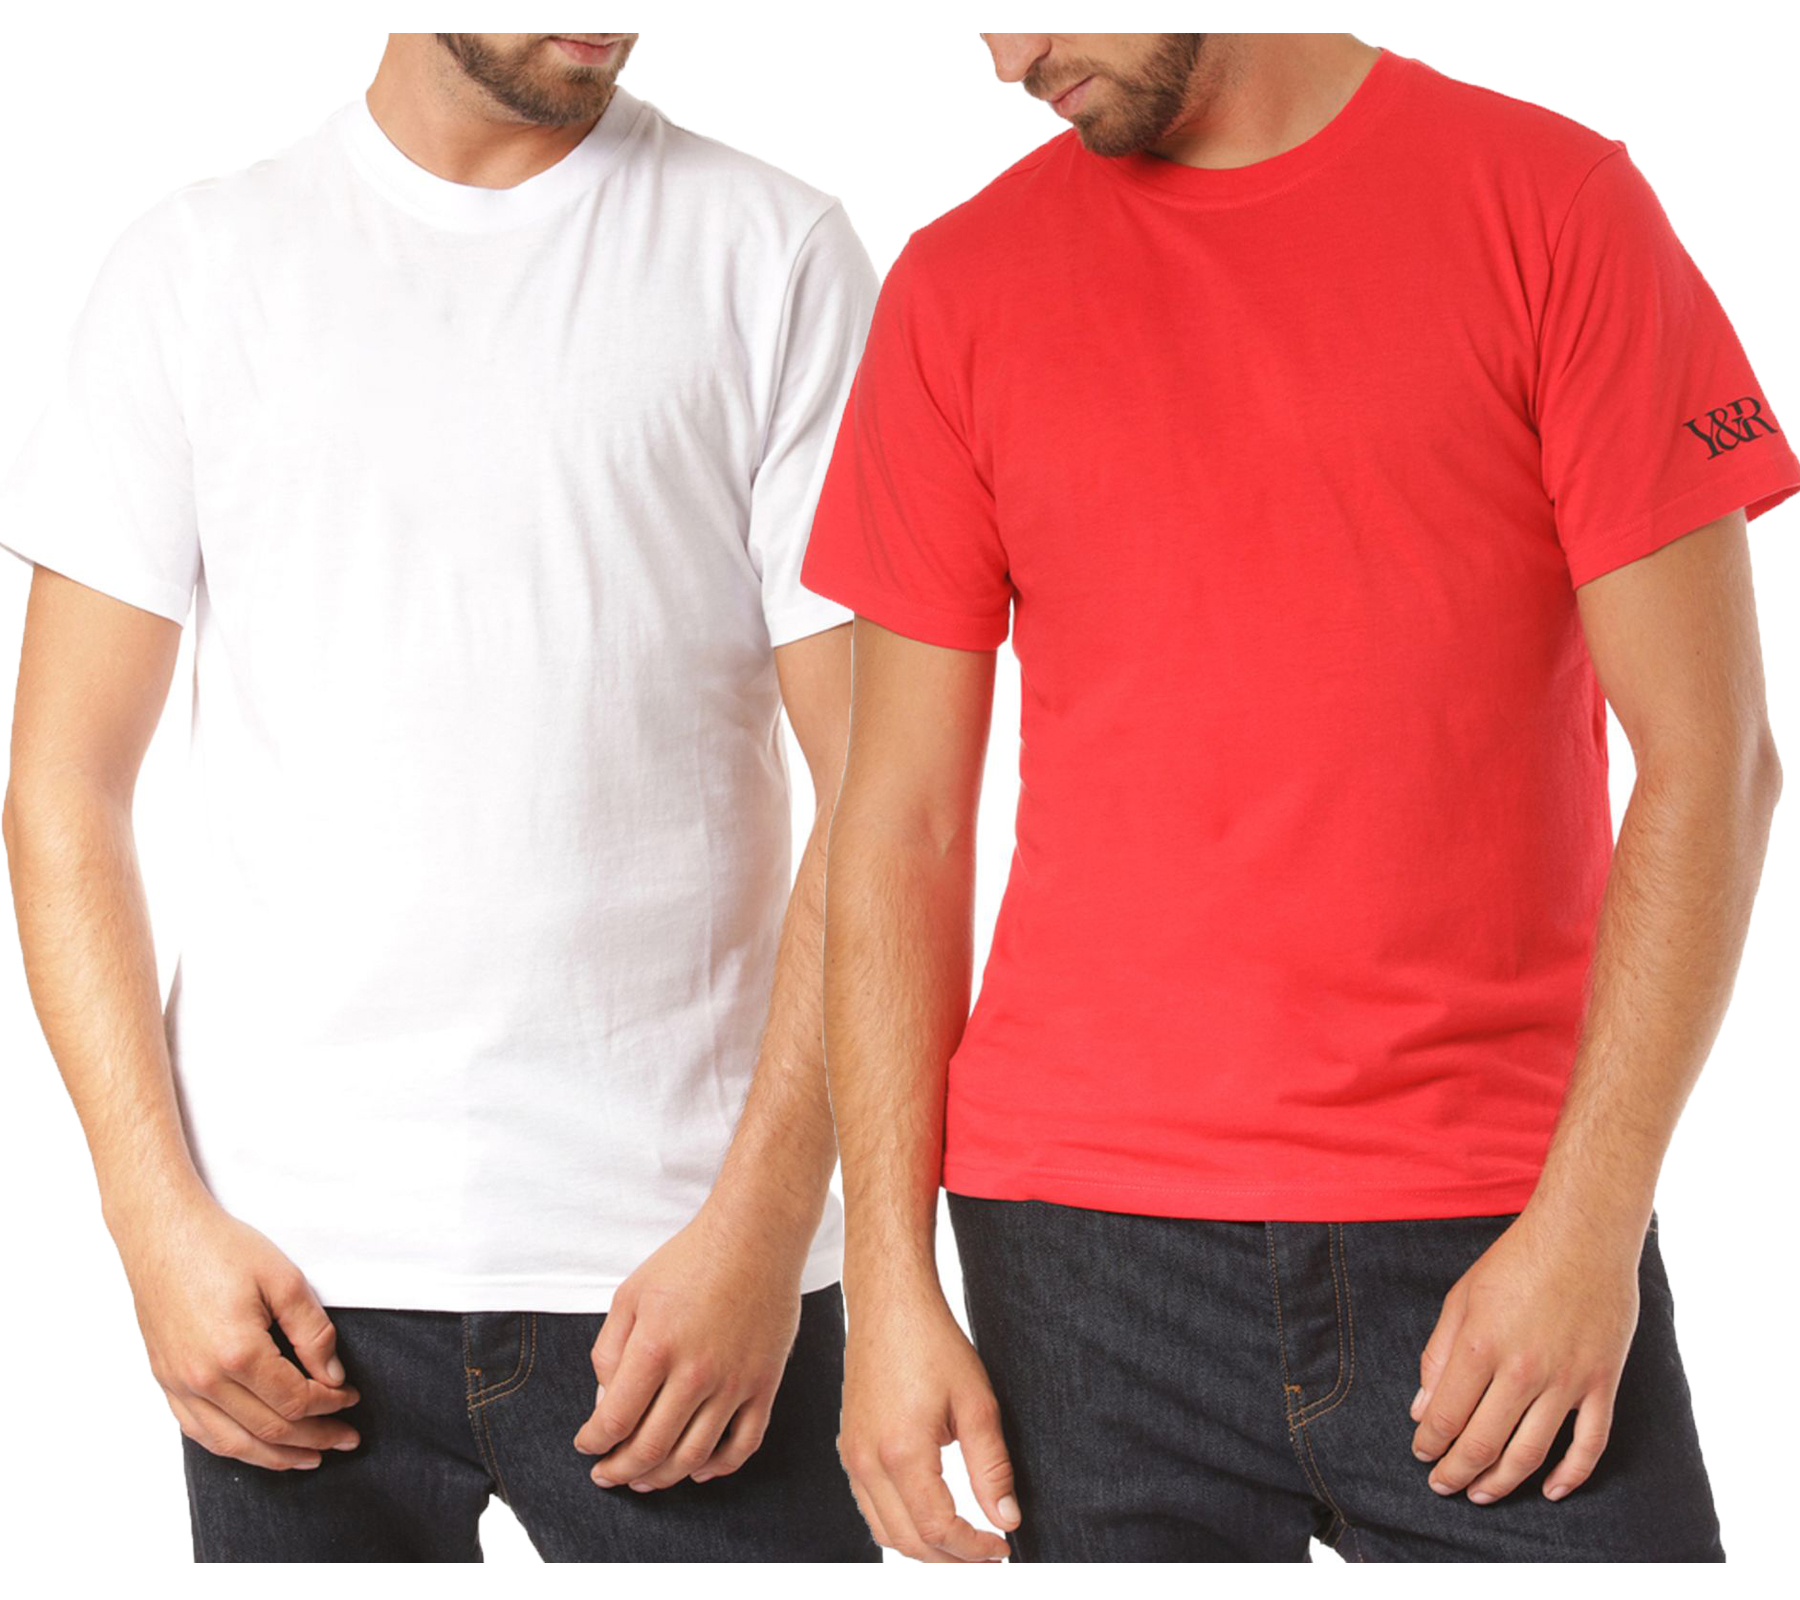 YOUNG & RECKLESS Savannah Herren T-Shirt Baumwoll-Shirt mit Rückenprint 110011 Weiß oder Rot von YOUNG  & RECKLESS